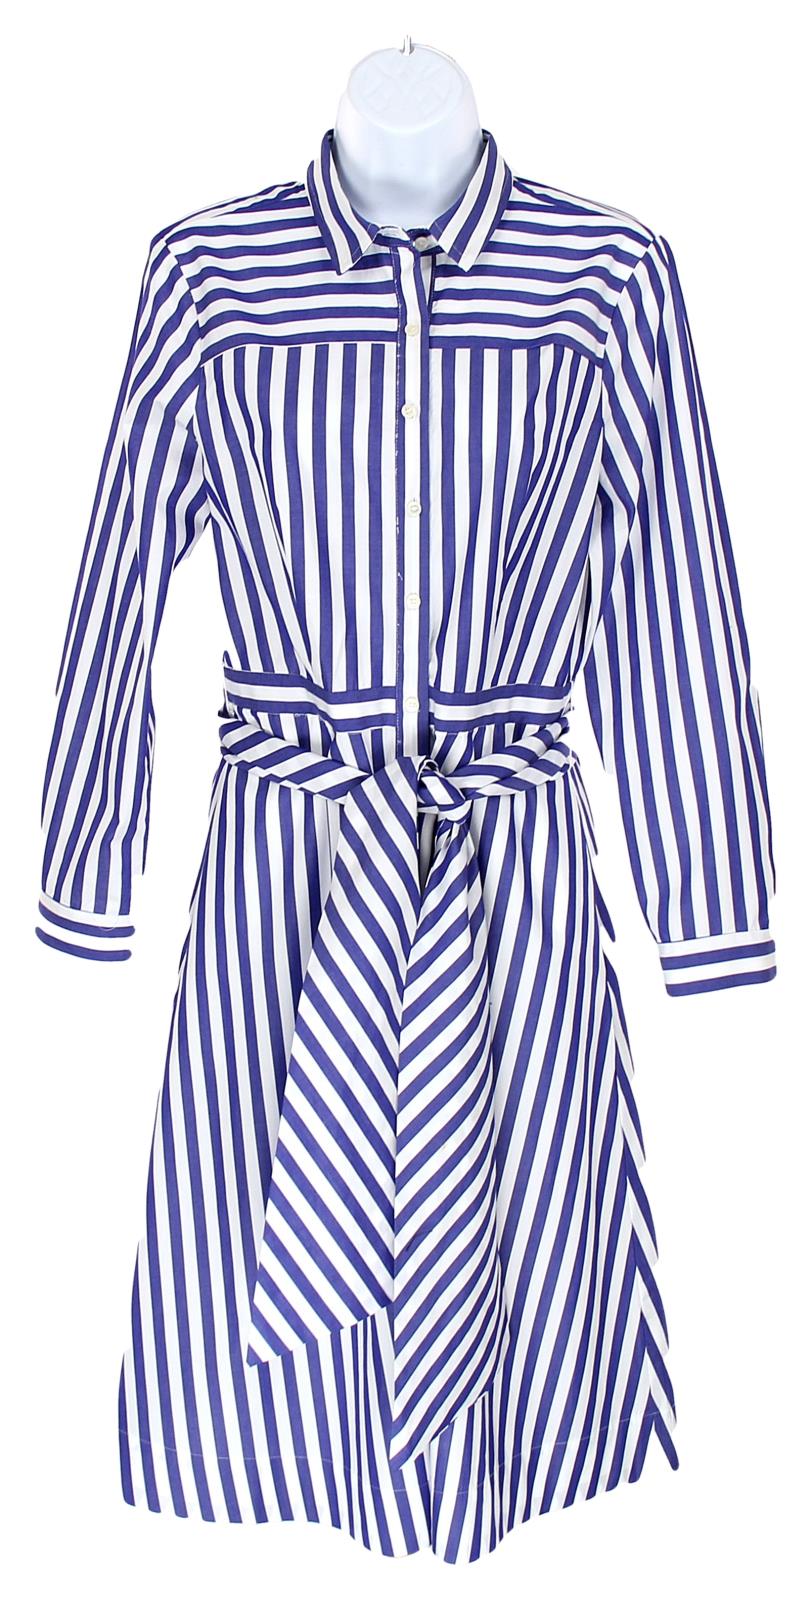 blue and white striped shirt dress womens